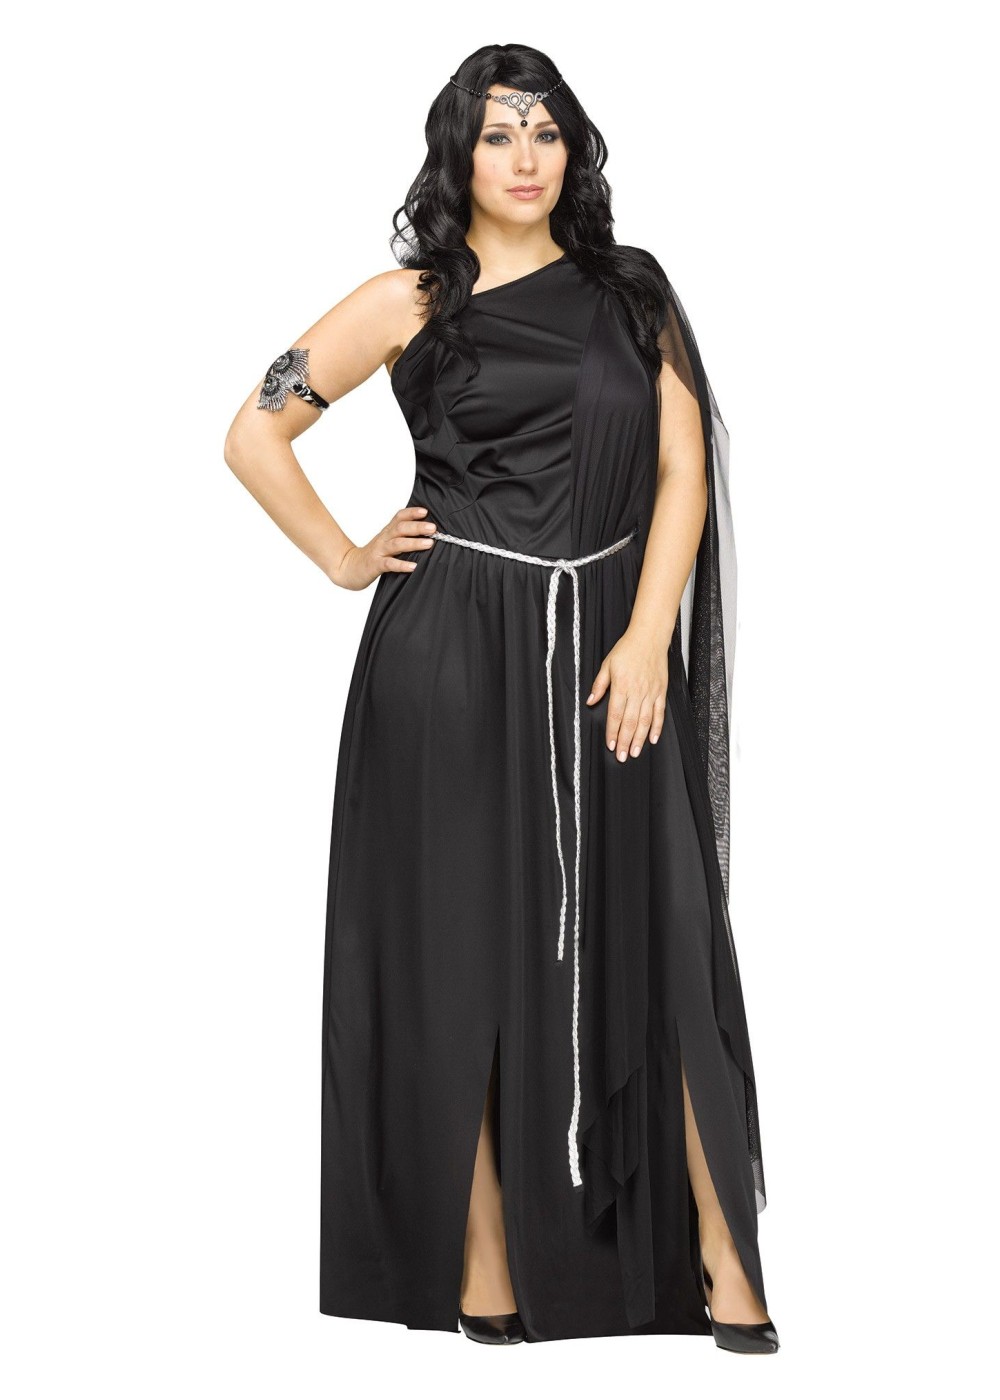 New Moon Dark Goddess Plus Size Costume Greek Costumes